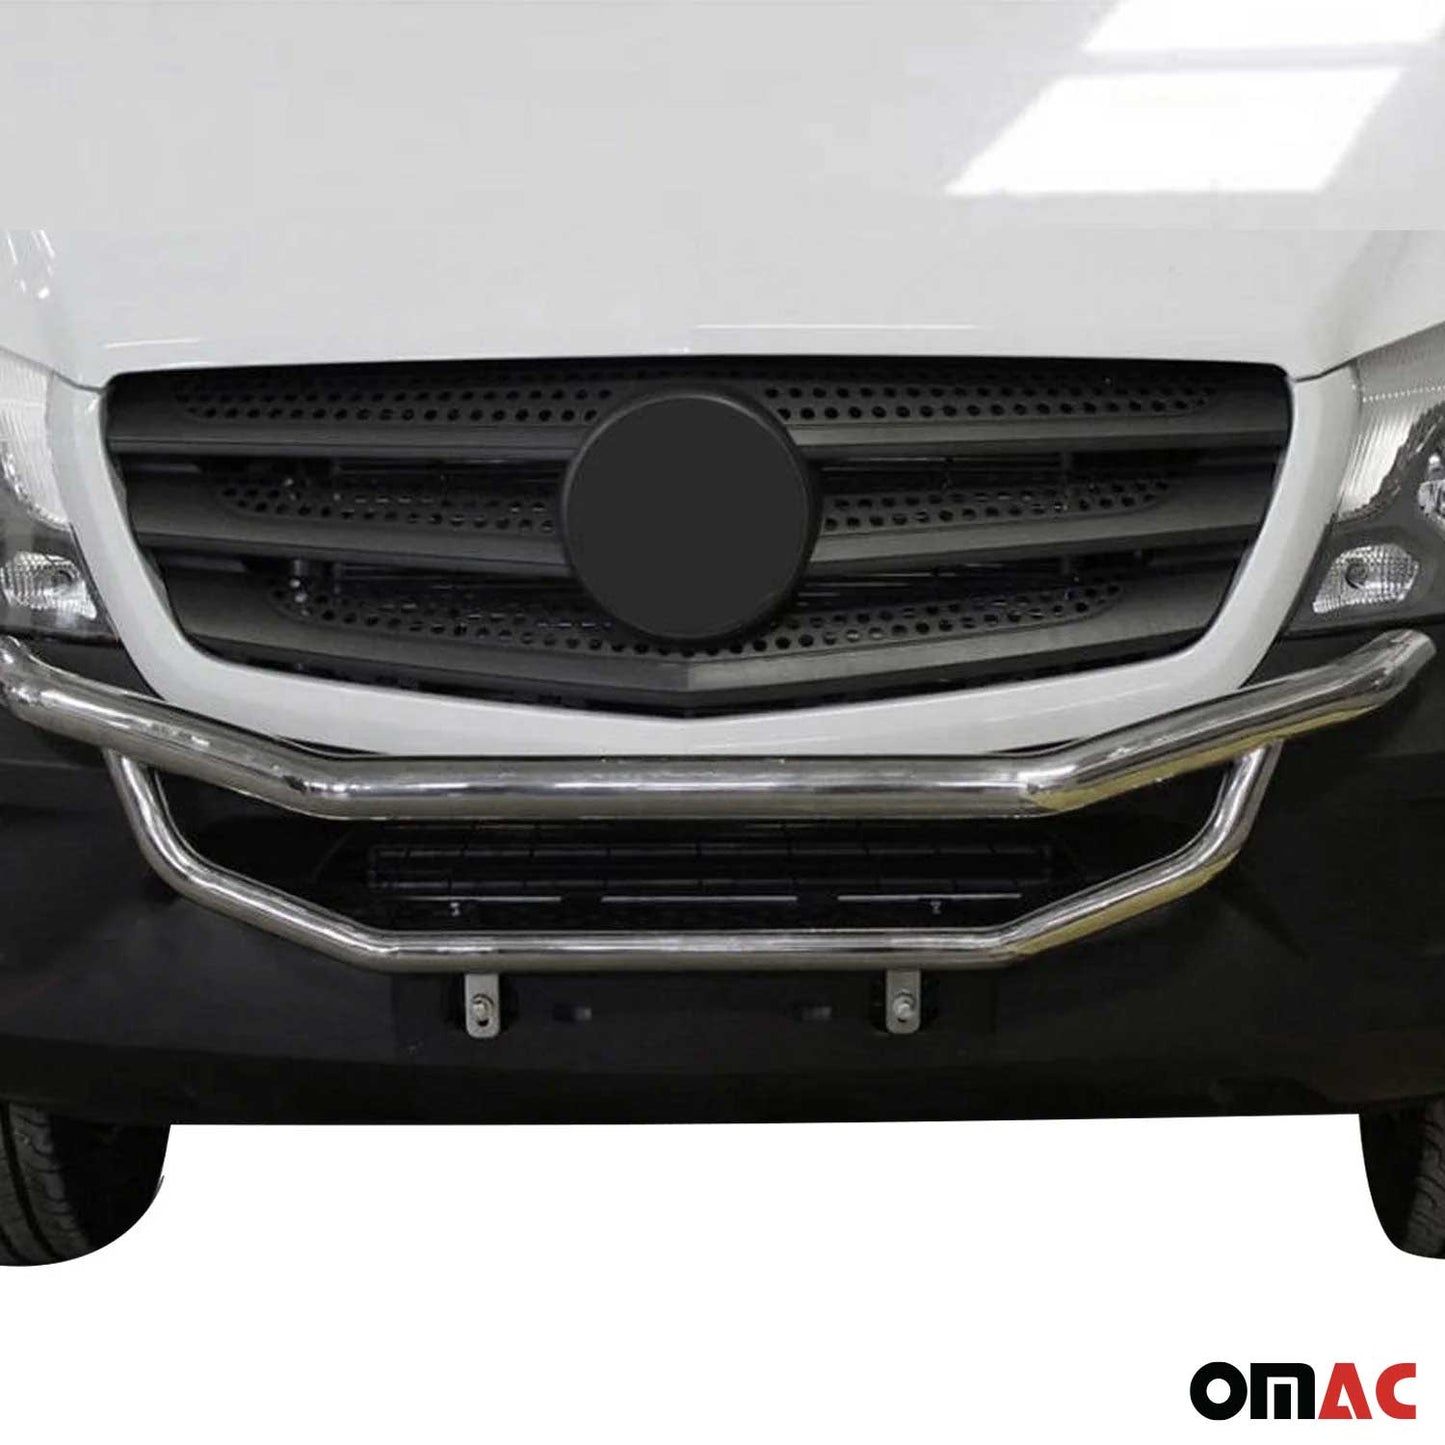 OMAC Bull Bar Push Front Bumper Grille for Mercedes Sprinter W906 2010-2013 60mm 4724OK104